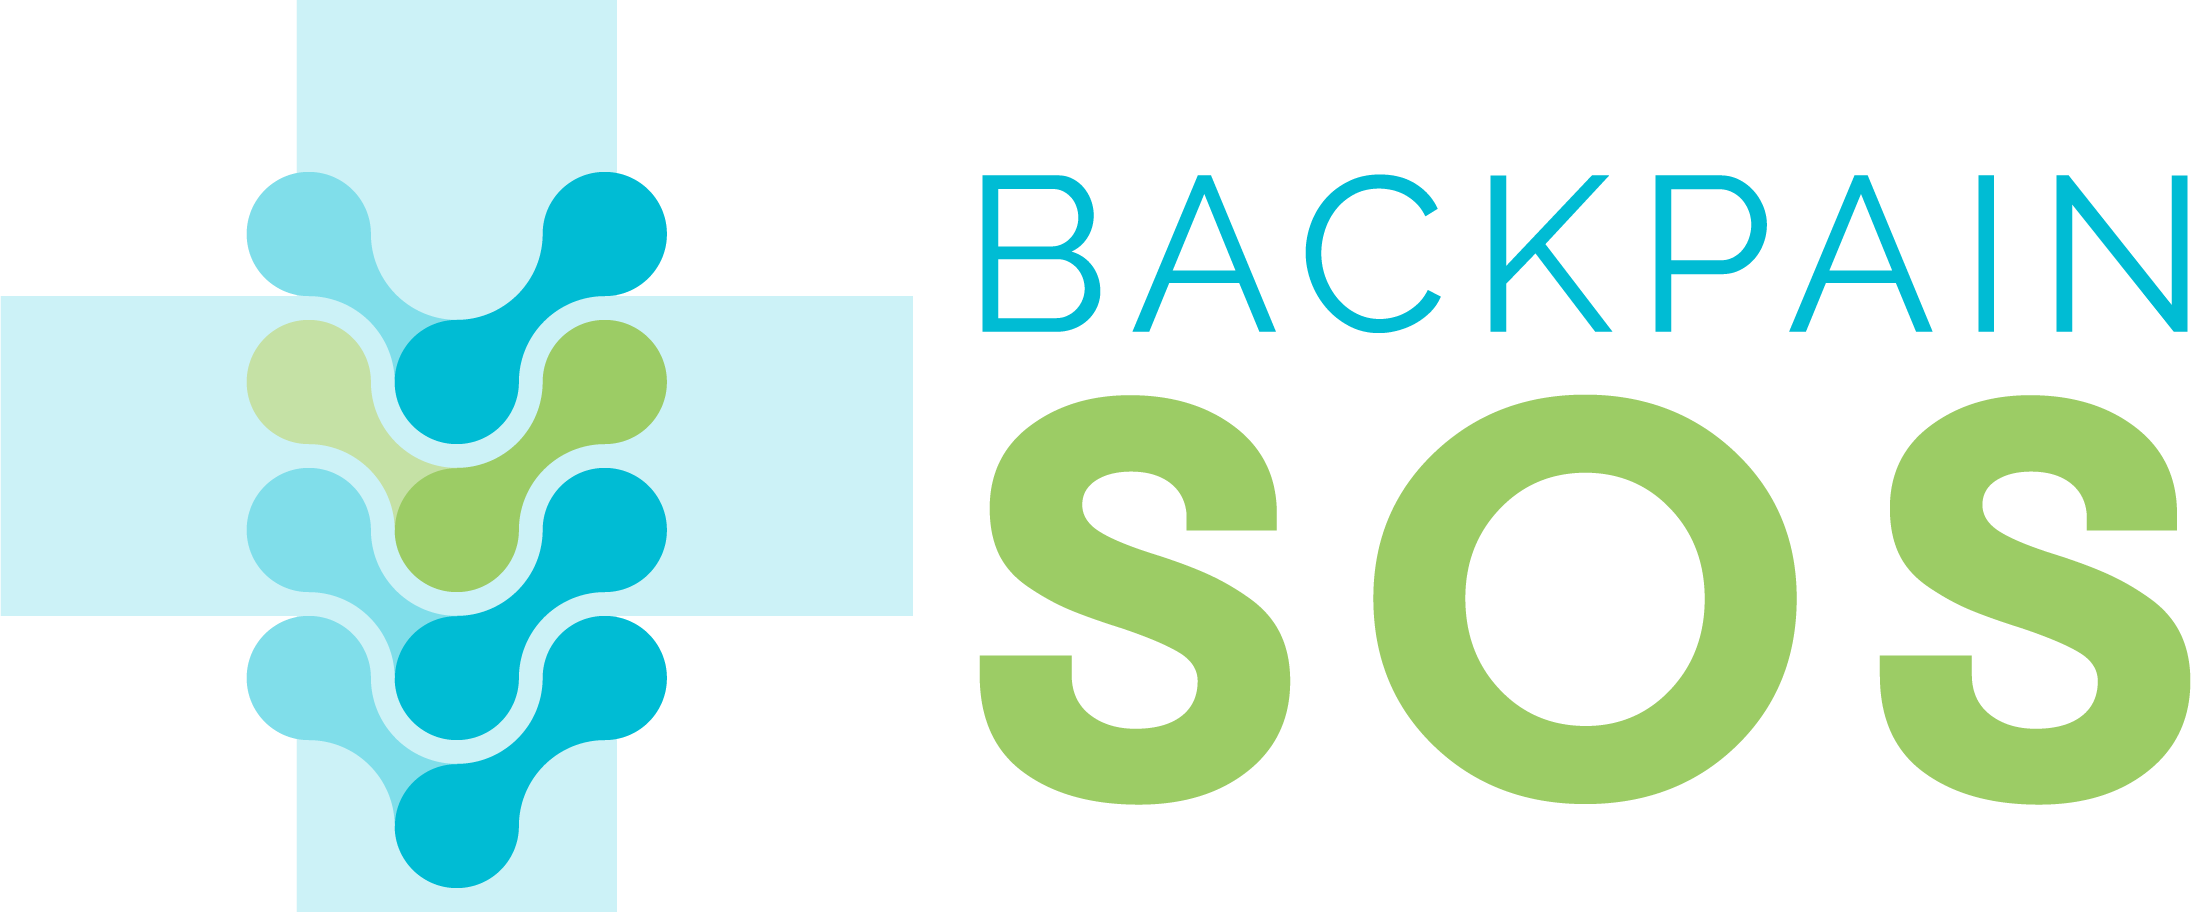 Backpain SOS logo